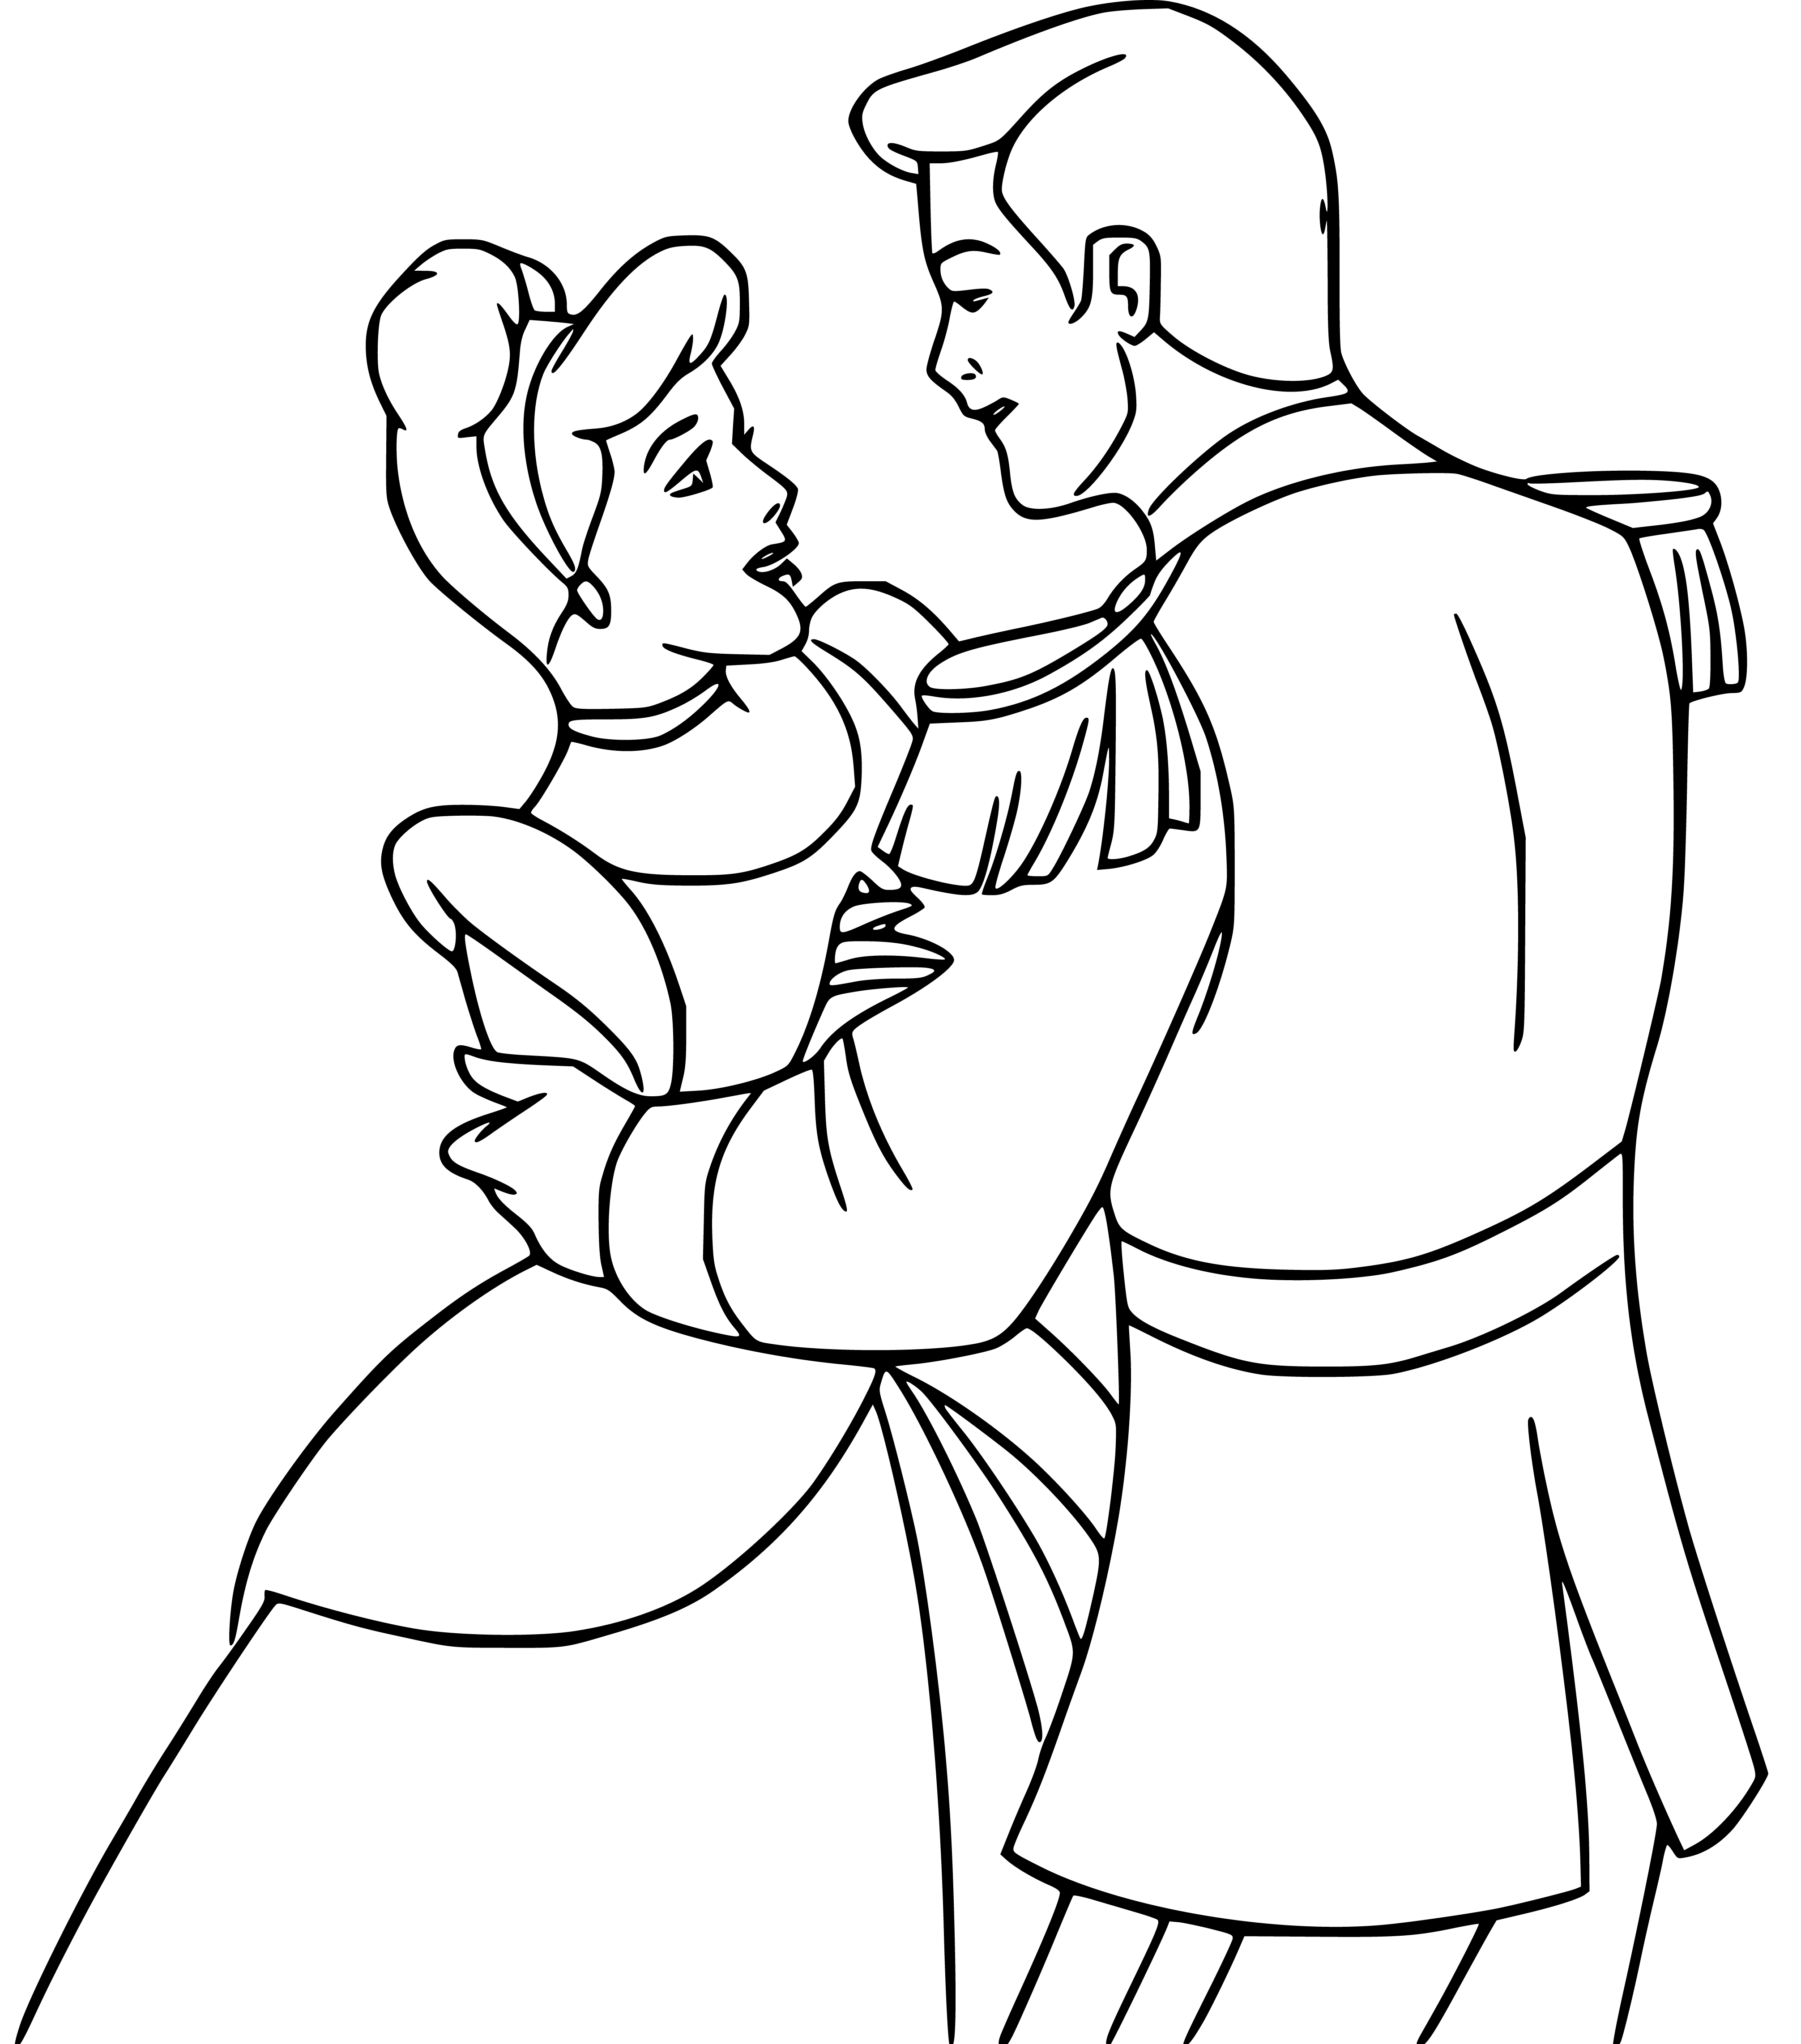 Princess Cinderella and Prince Charming Coloring Pages for Kids - SheetalColor.com